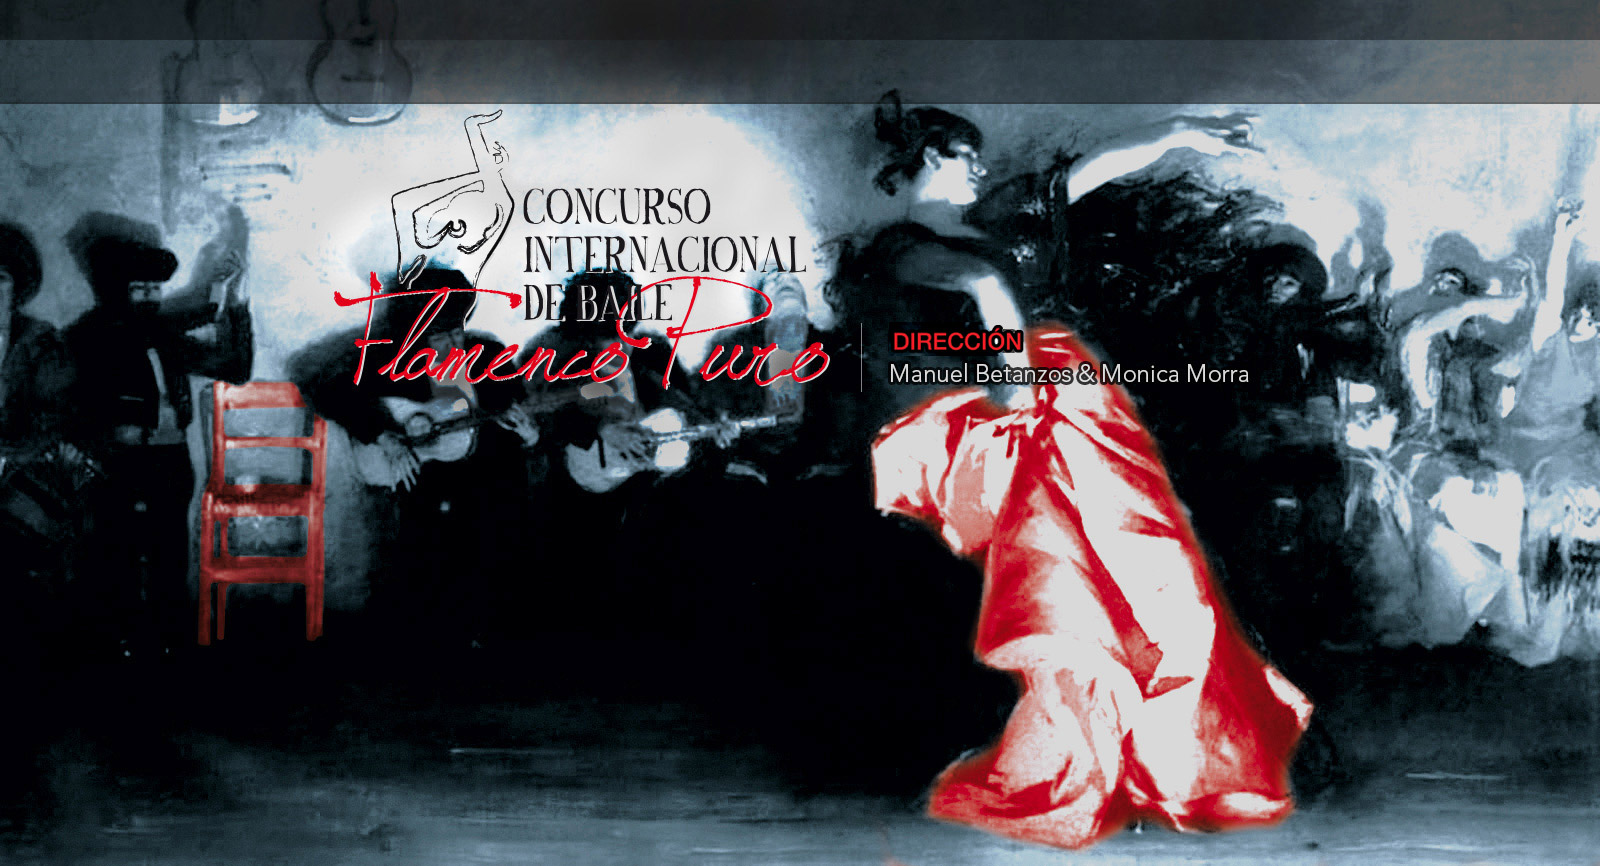 Concurso Internacional de baile Flamenco Puro